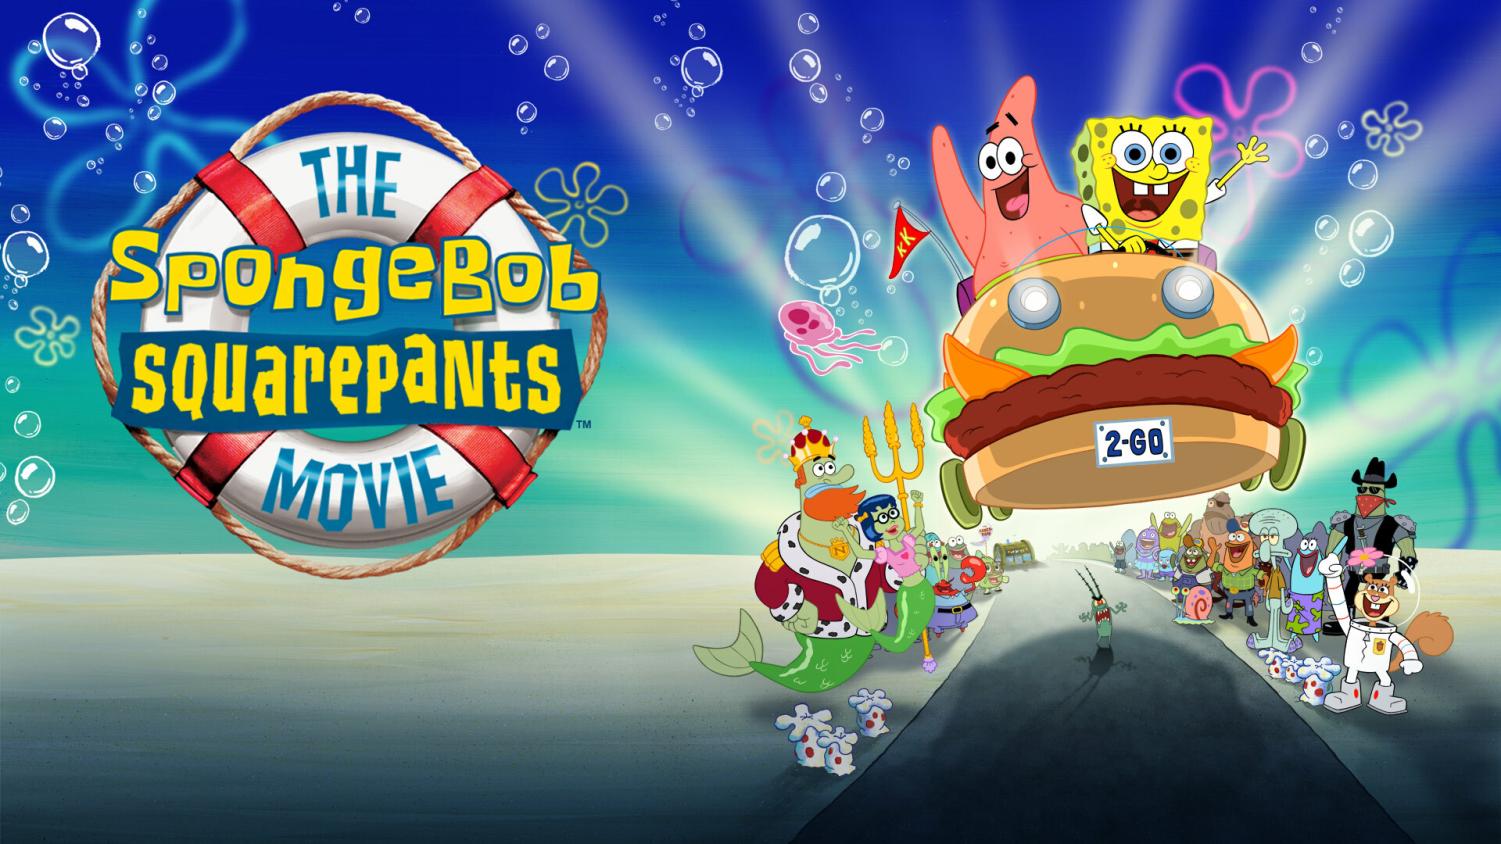 The Team Who Wrote the 'SpongeBob SquarePants' Theme Song 